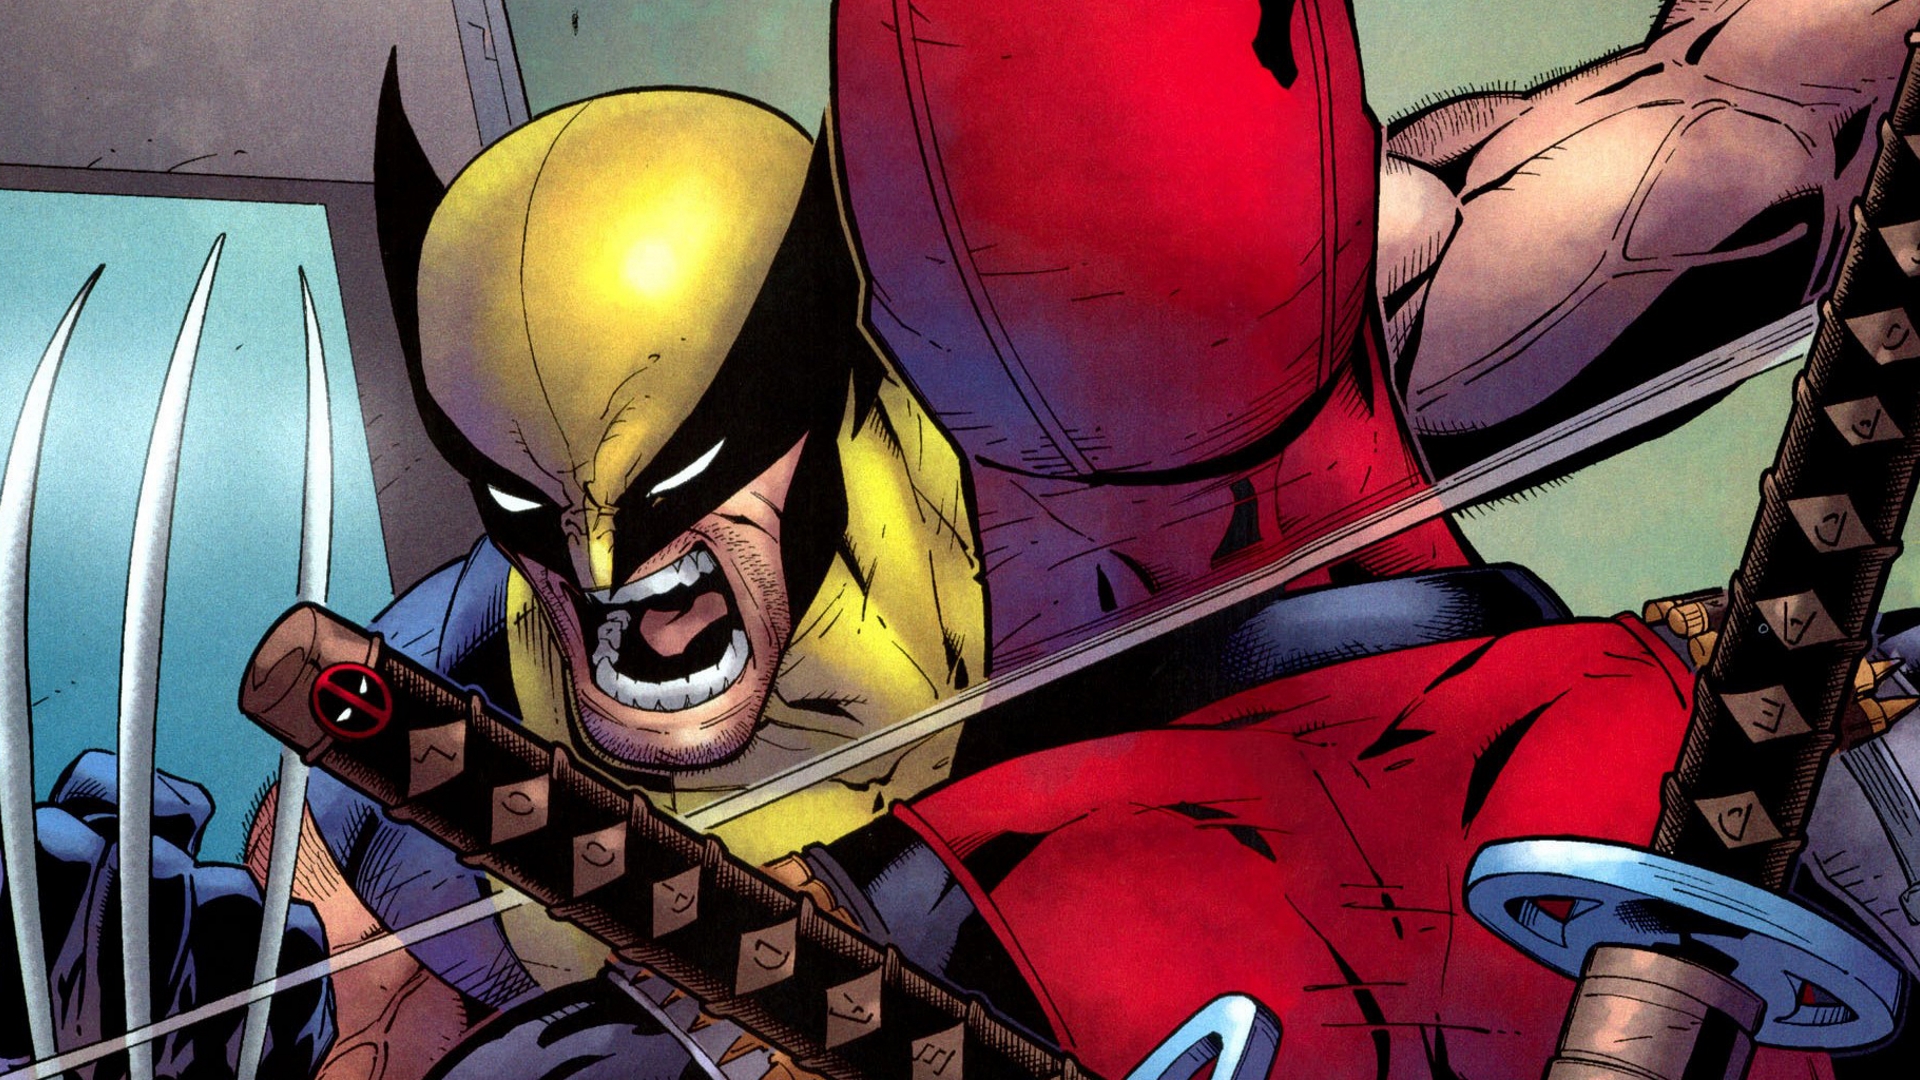 X-Men Origins: Wolverine vs Deadpool Full HD Wallpaper and Background